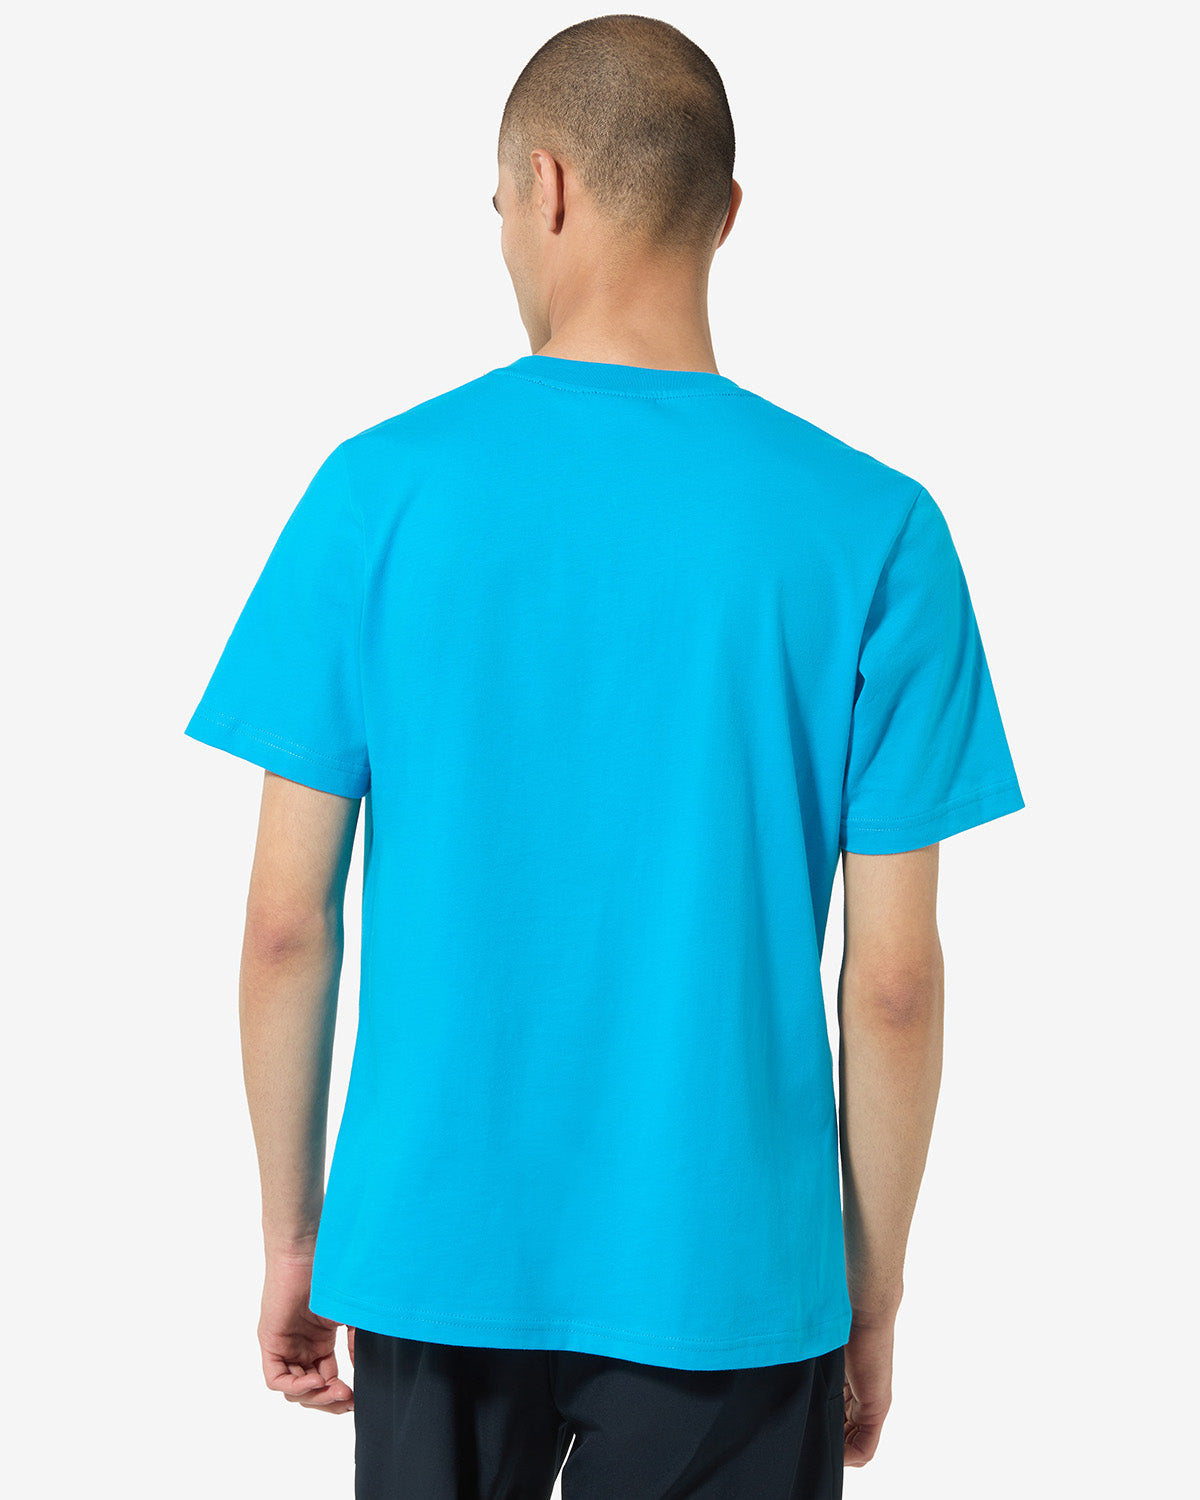 Urban T-shirt: Australian Sportswear